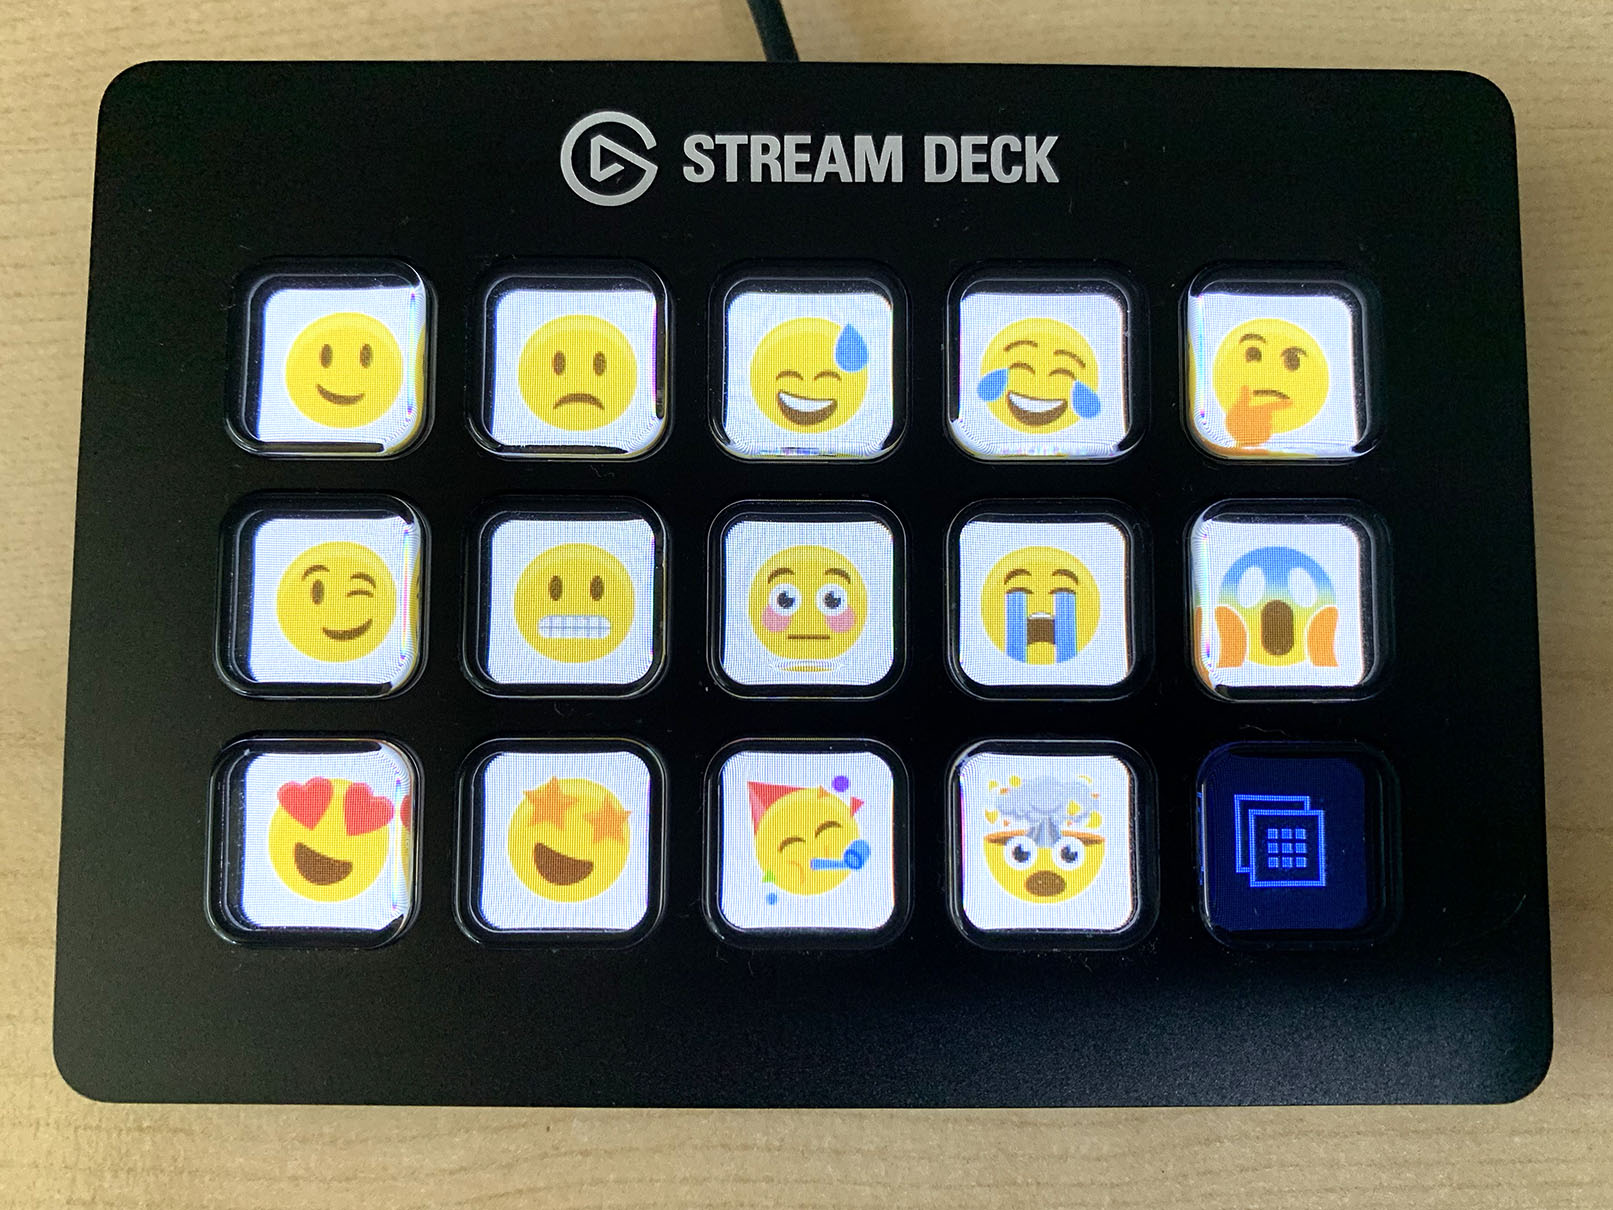 A Stream Deck showing a set of Emoji icons